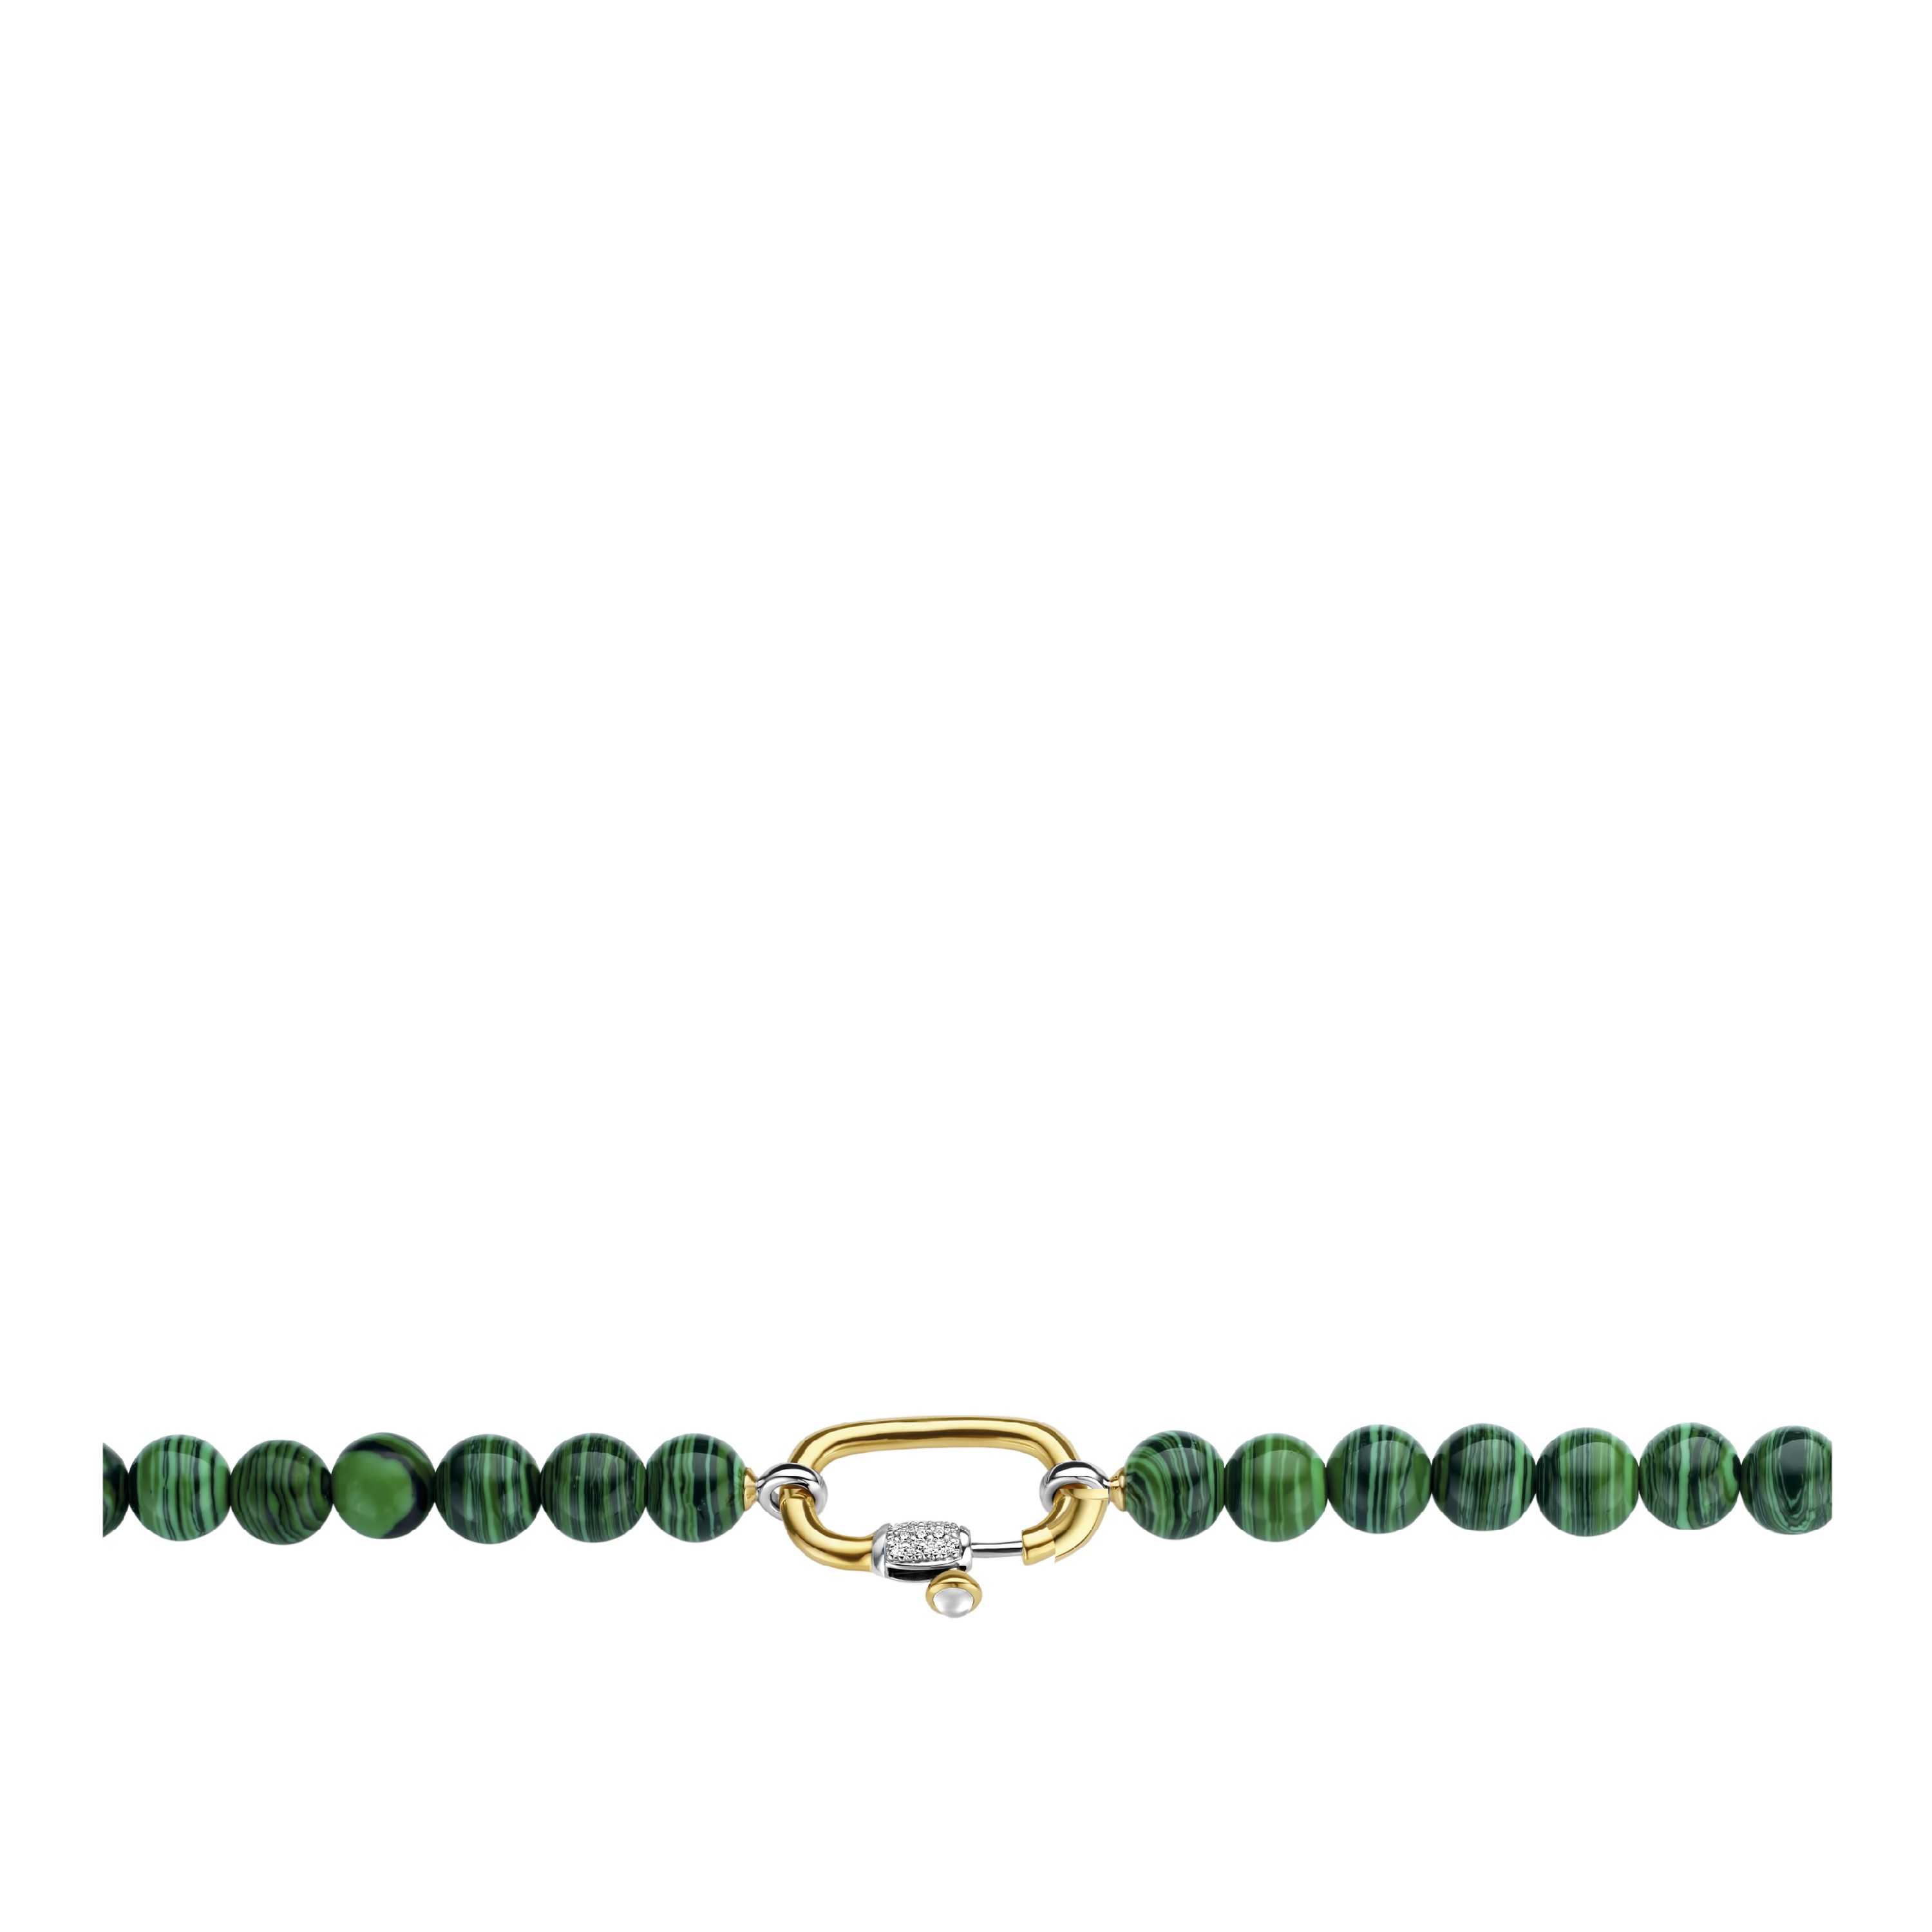 TI SENTO - Milano Necklace 3967MA Image 3 Gala Jewelers Inc. White Oak, PA